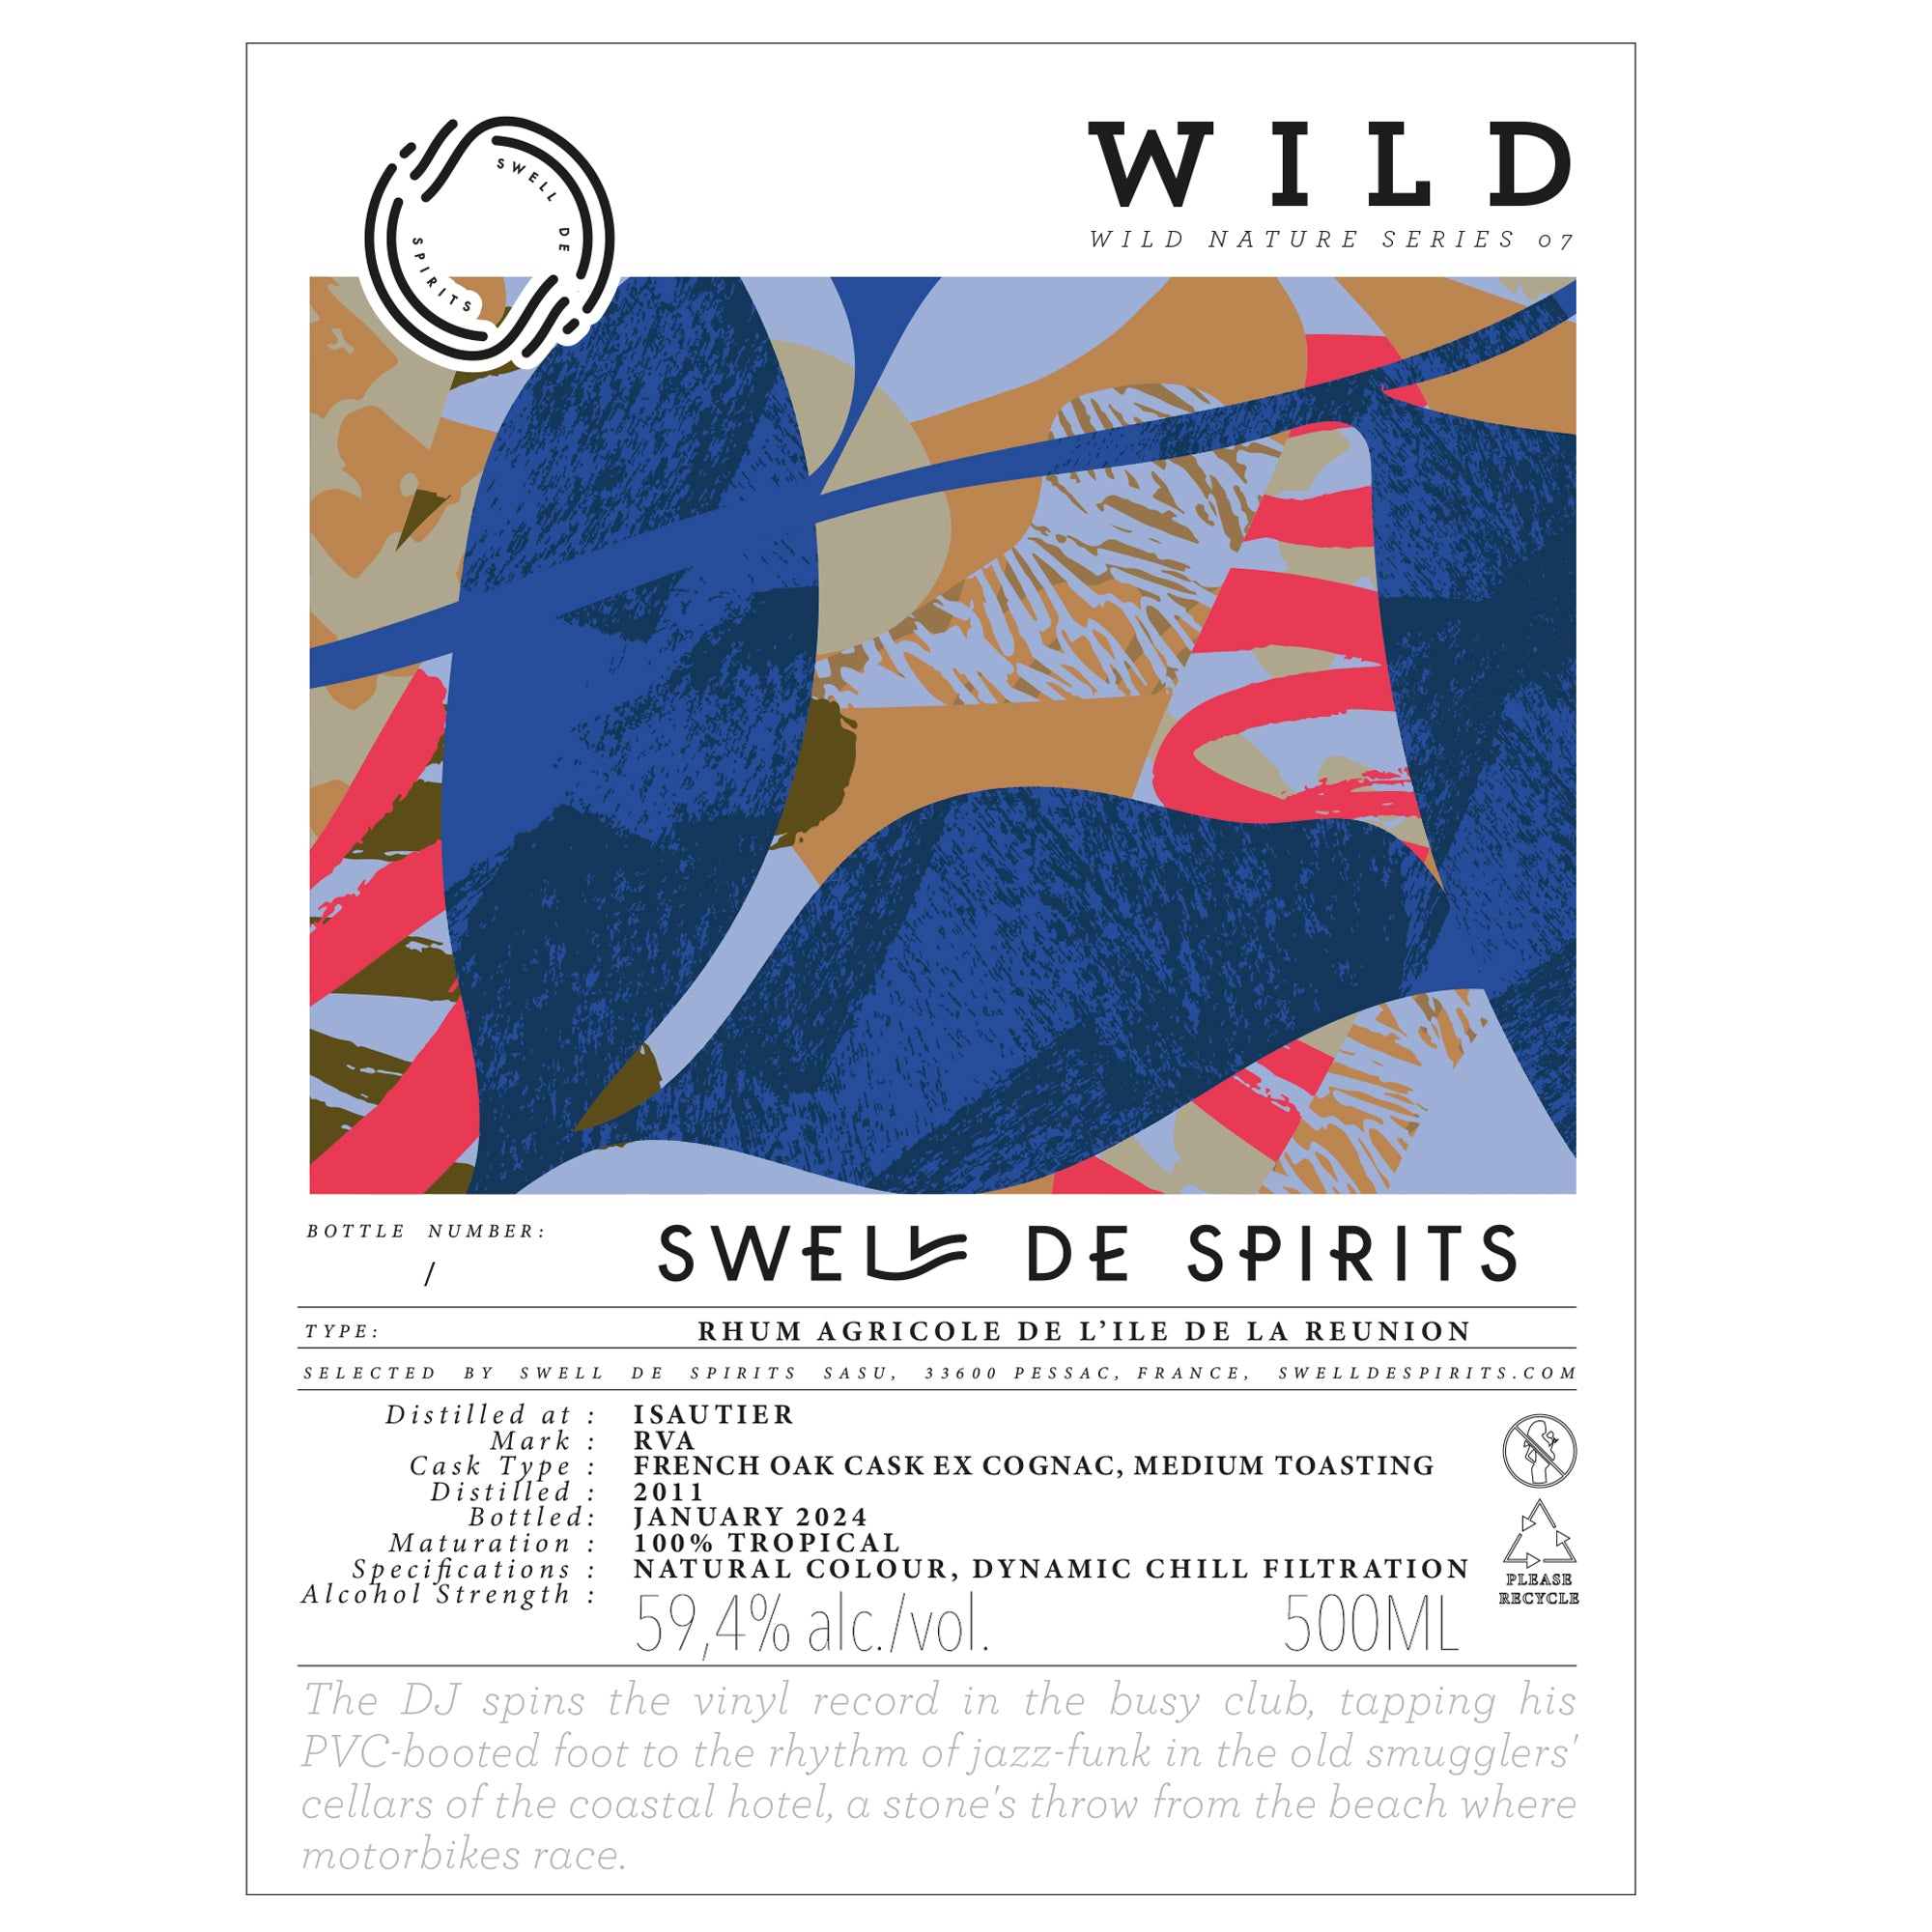 Précommande #7 Swell de spirits Wild Series Rhum agricole Isautier RVA 2011, Full tropical, 59,4% ABV, Single Cask 316 bouteilles, 50cl